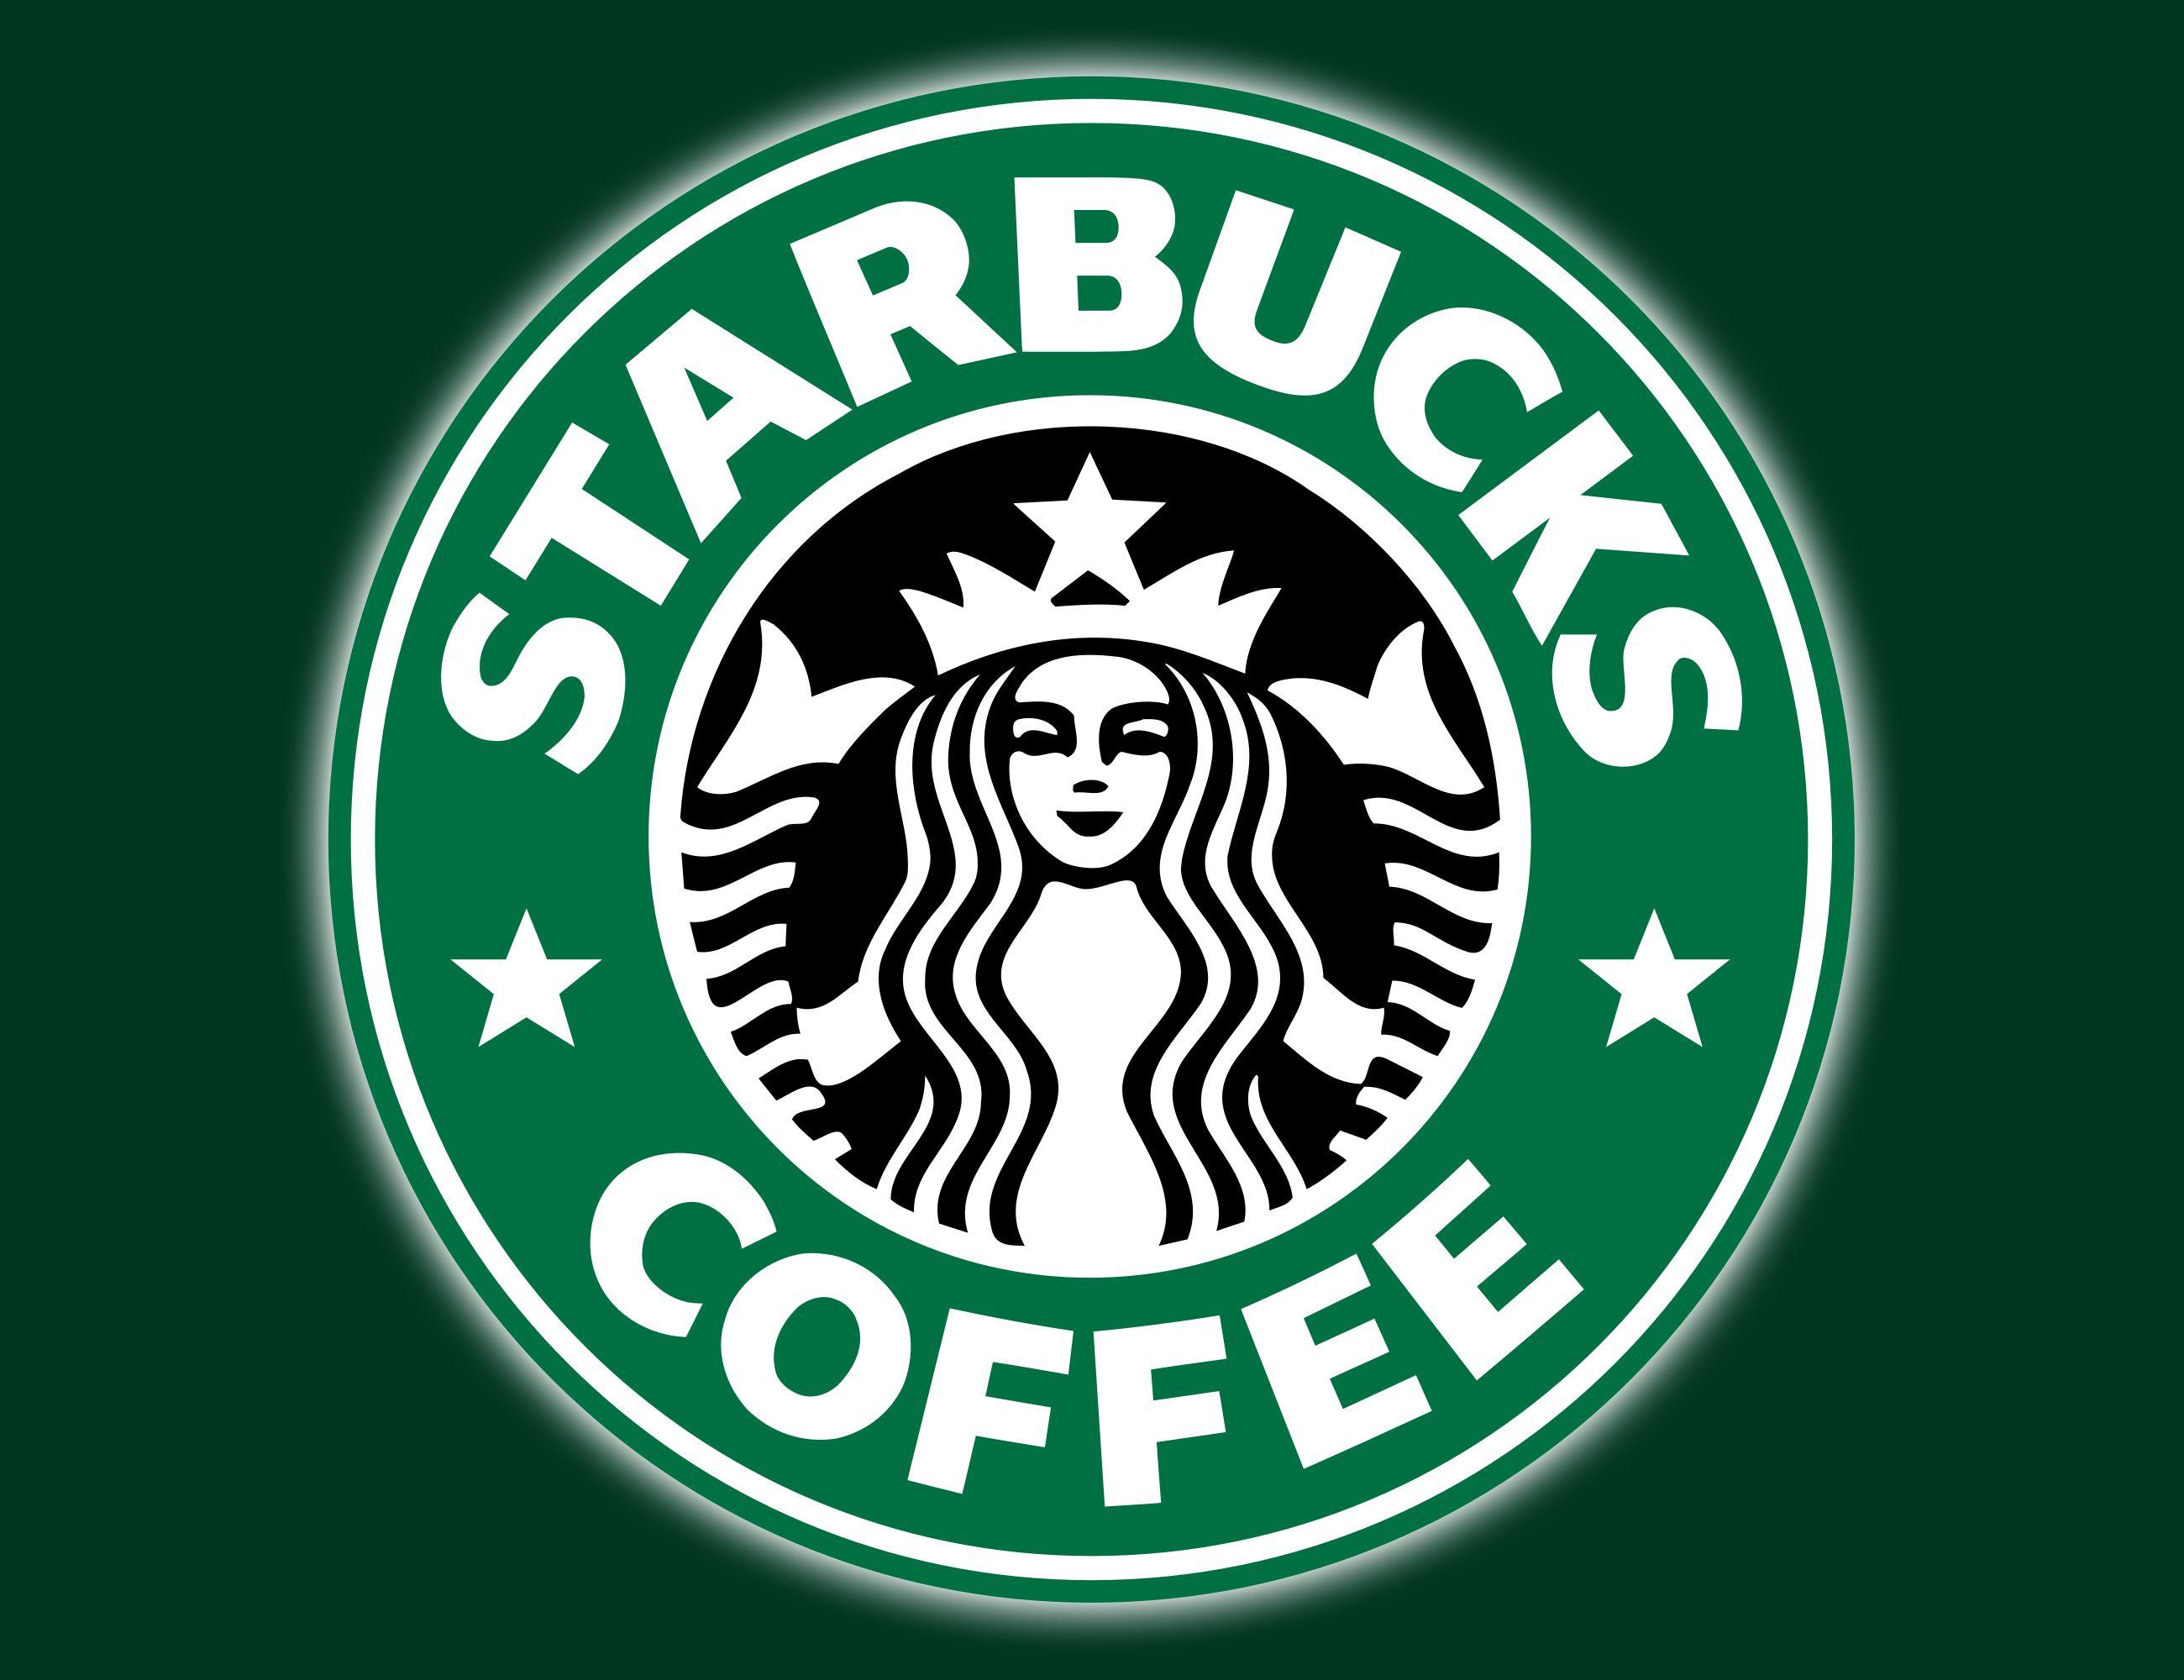 Startbucks Logo - Starbucks Logo, symbol meaning, History and Evolution